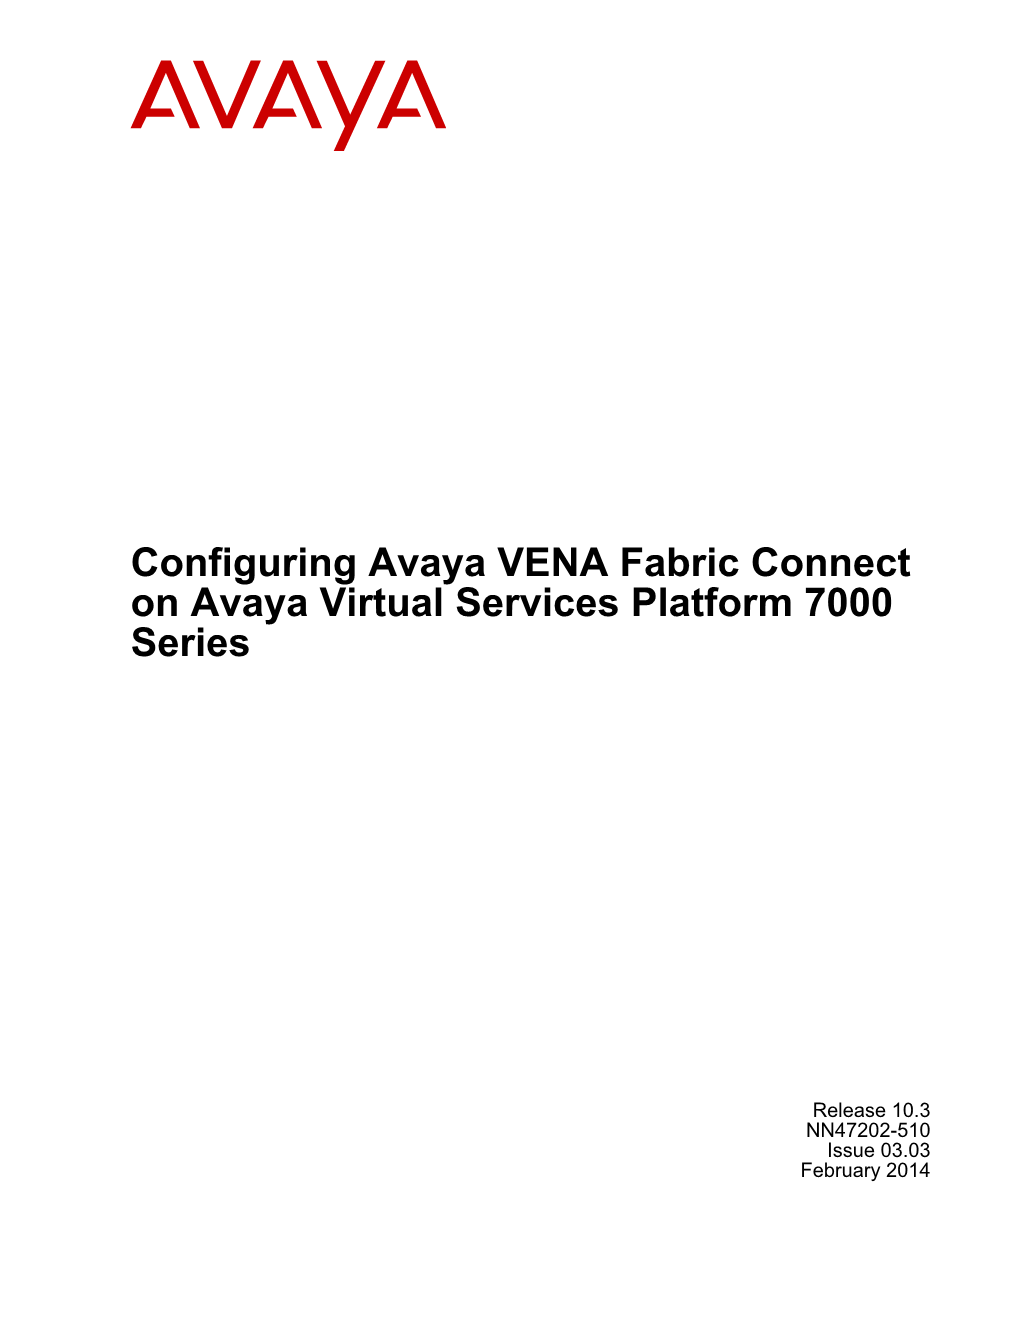 Configuring Avaya VENA Fabric Connect on Avaya Virtual Services Platform 7000 Series